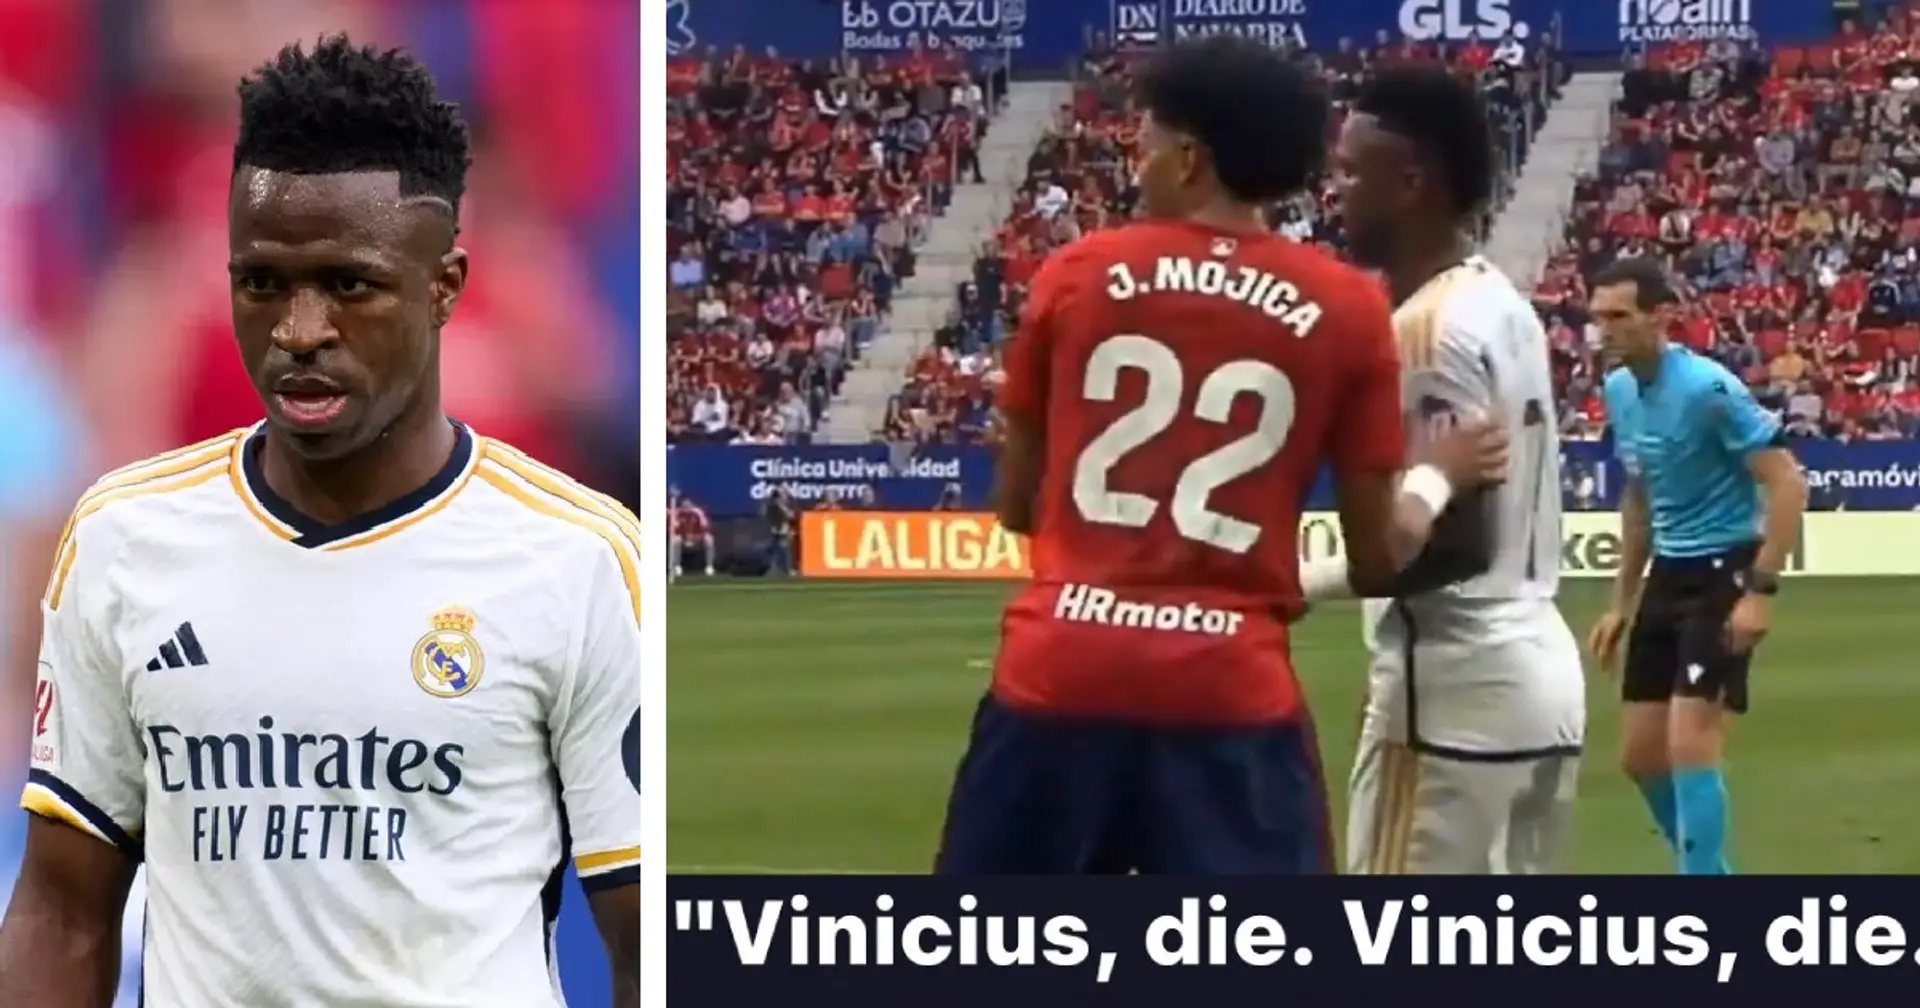 Video evidence shows Osasuna fans chanting 'Vinicius die' - captured